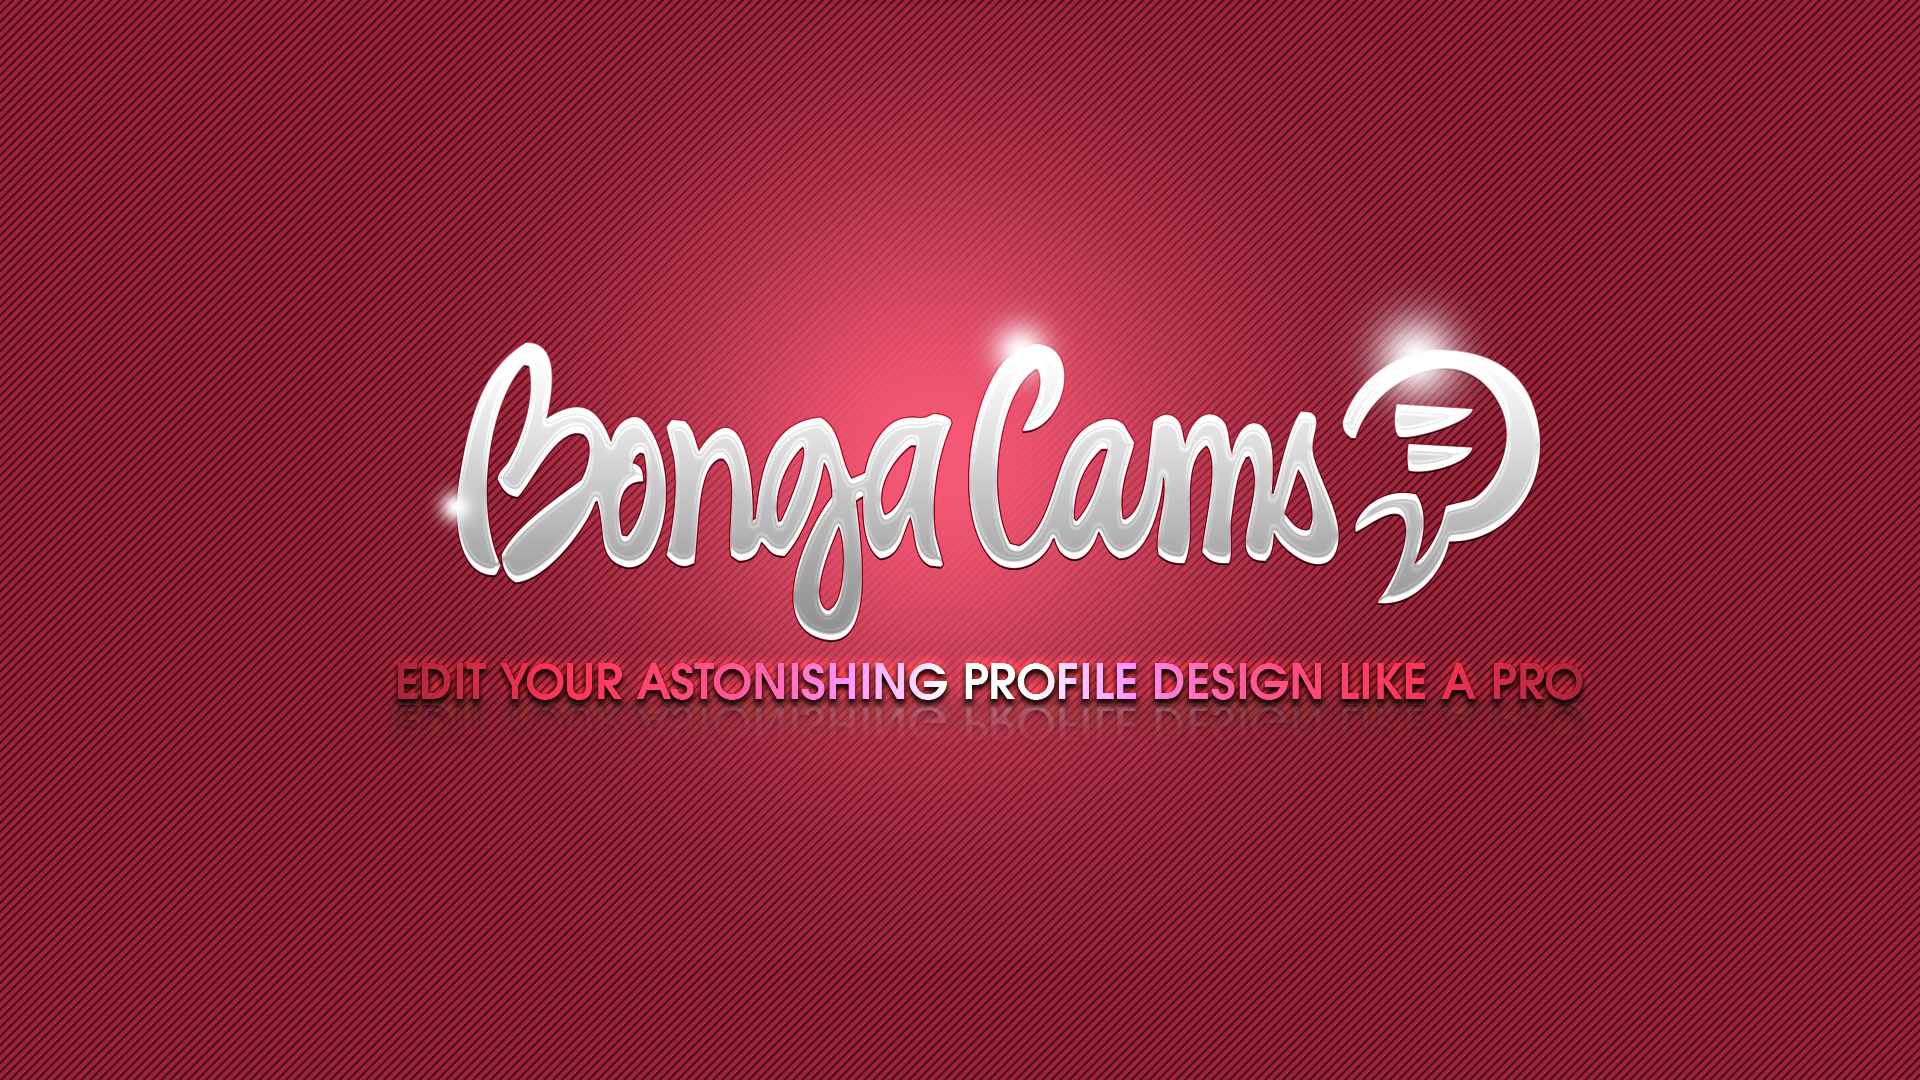 Bongacams cat. Bongacams логотип. Бонгакамс логотип. Bongacams значок. Бонгакам видеореклама.